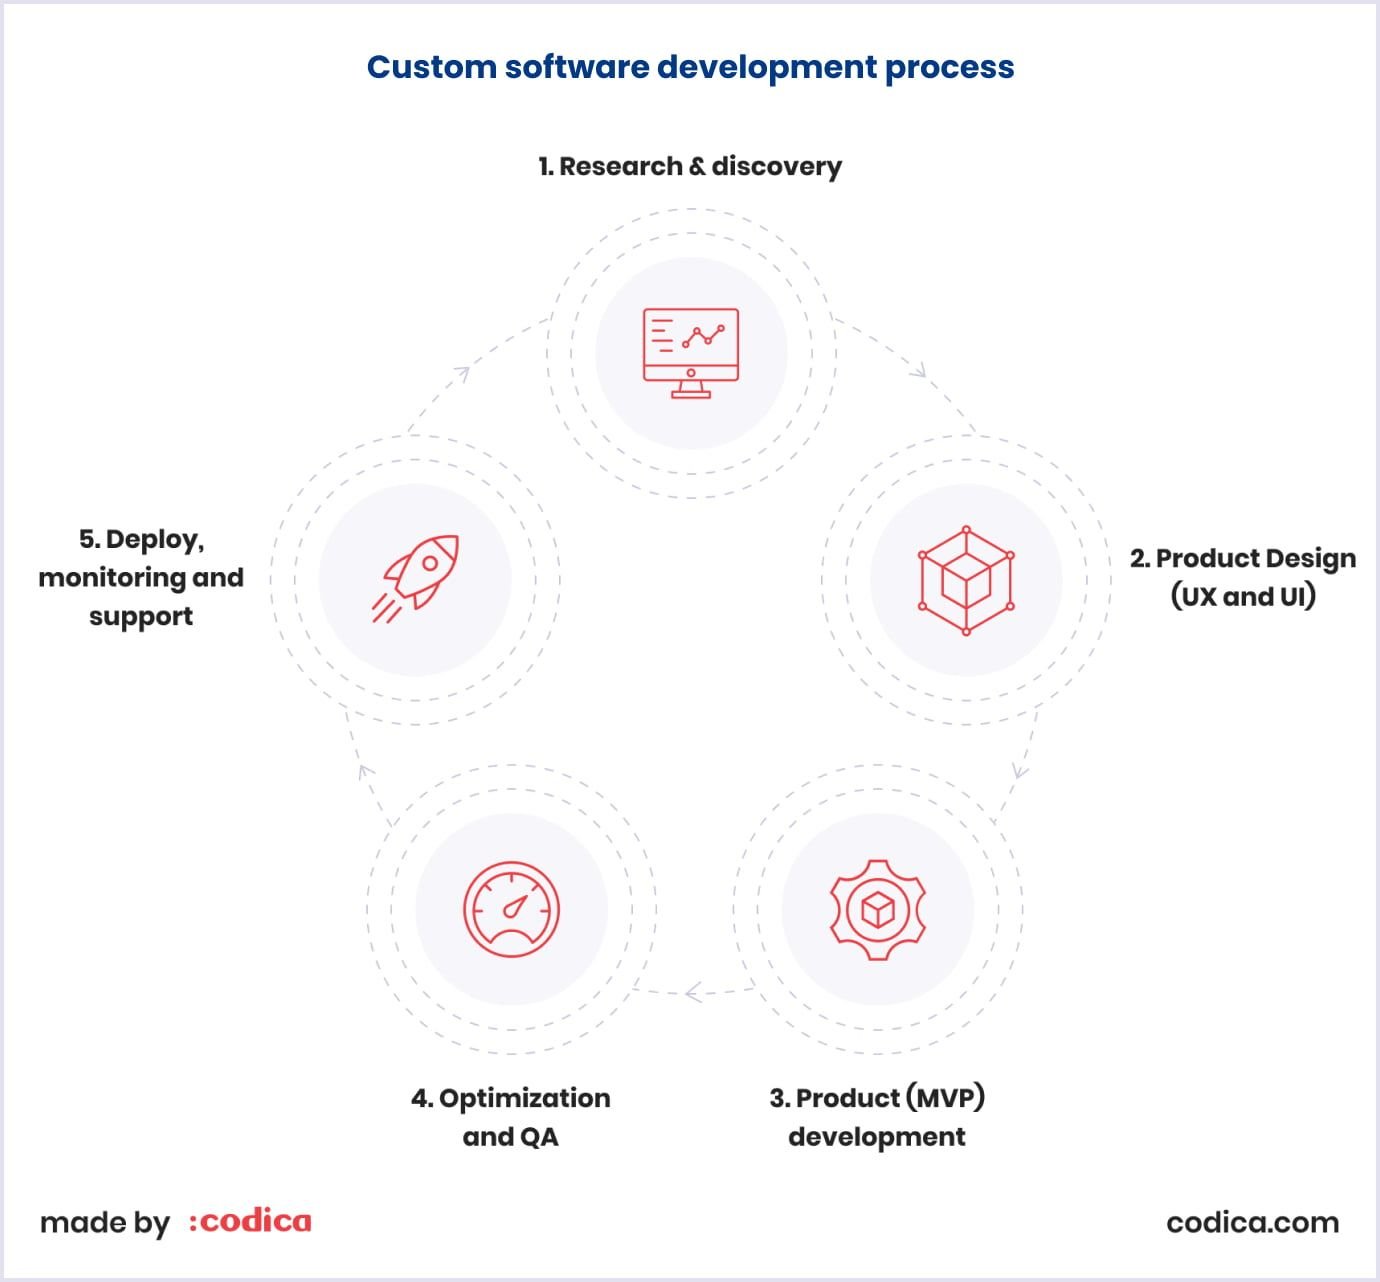 Custom software development lifecycle at Codica